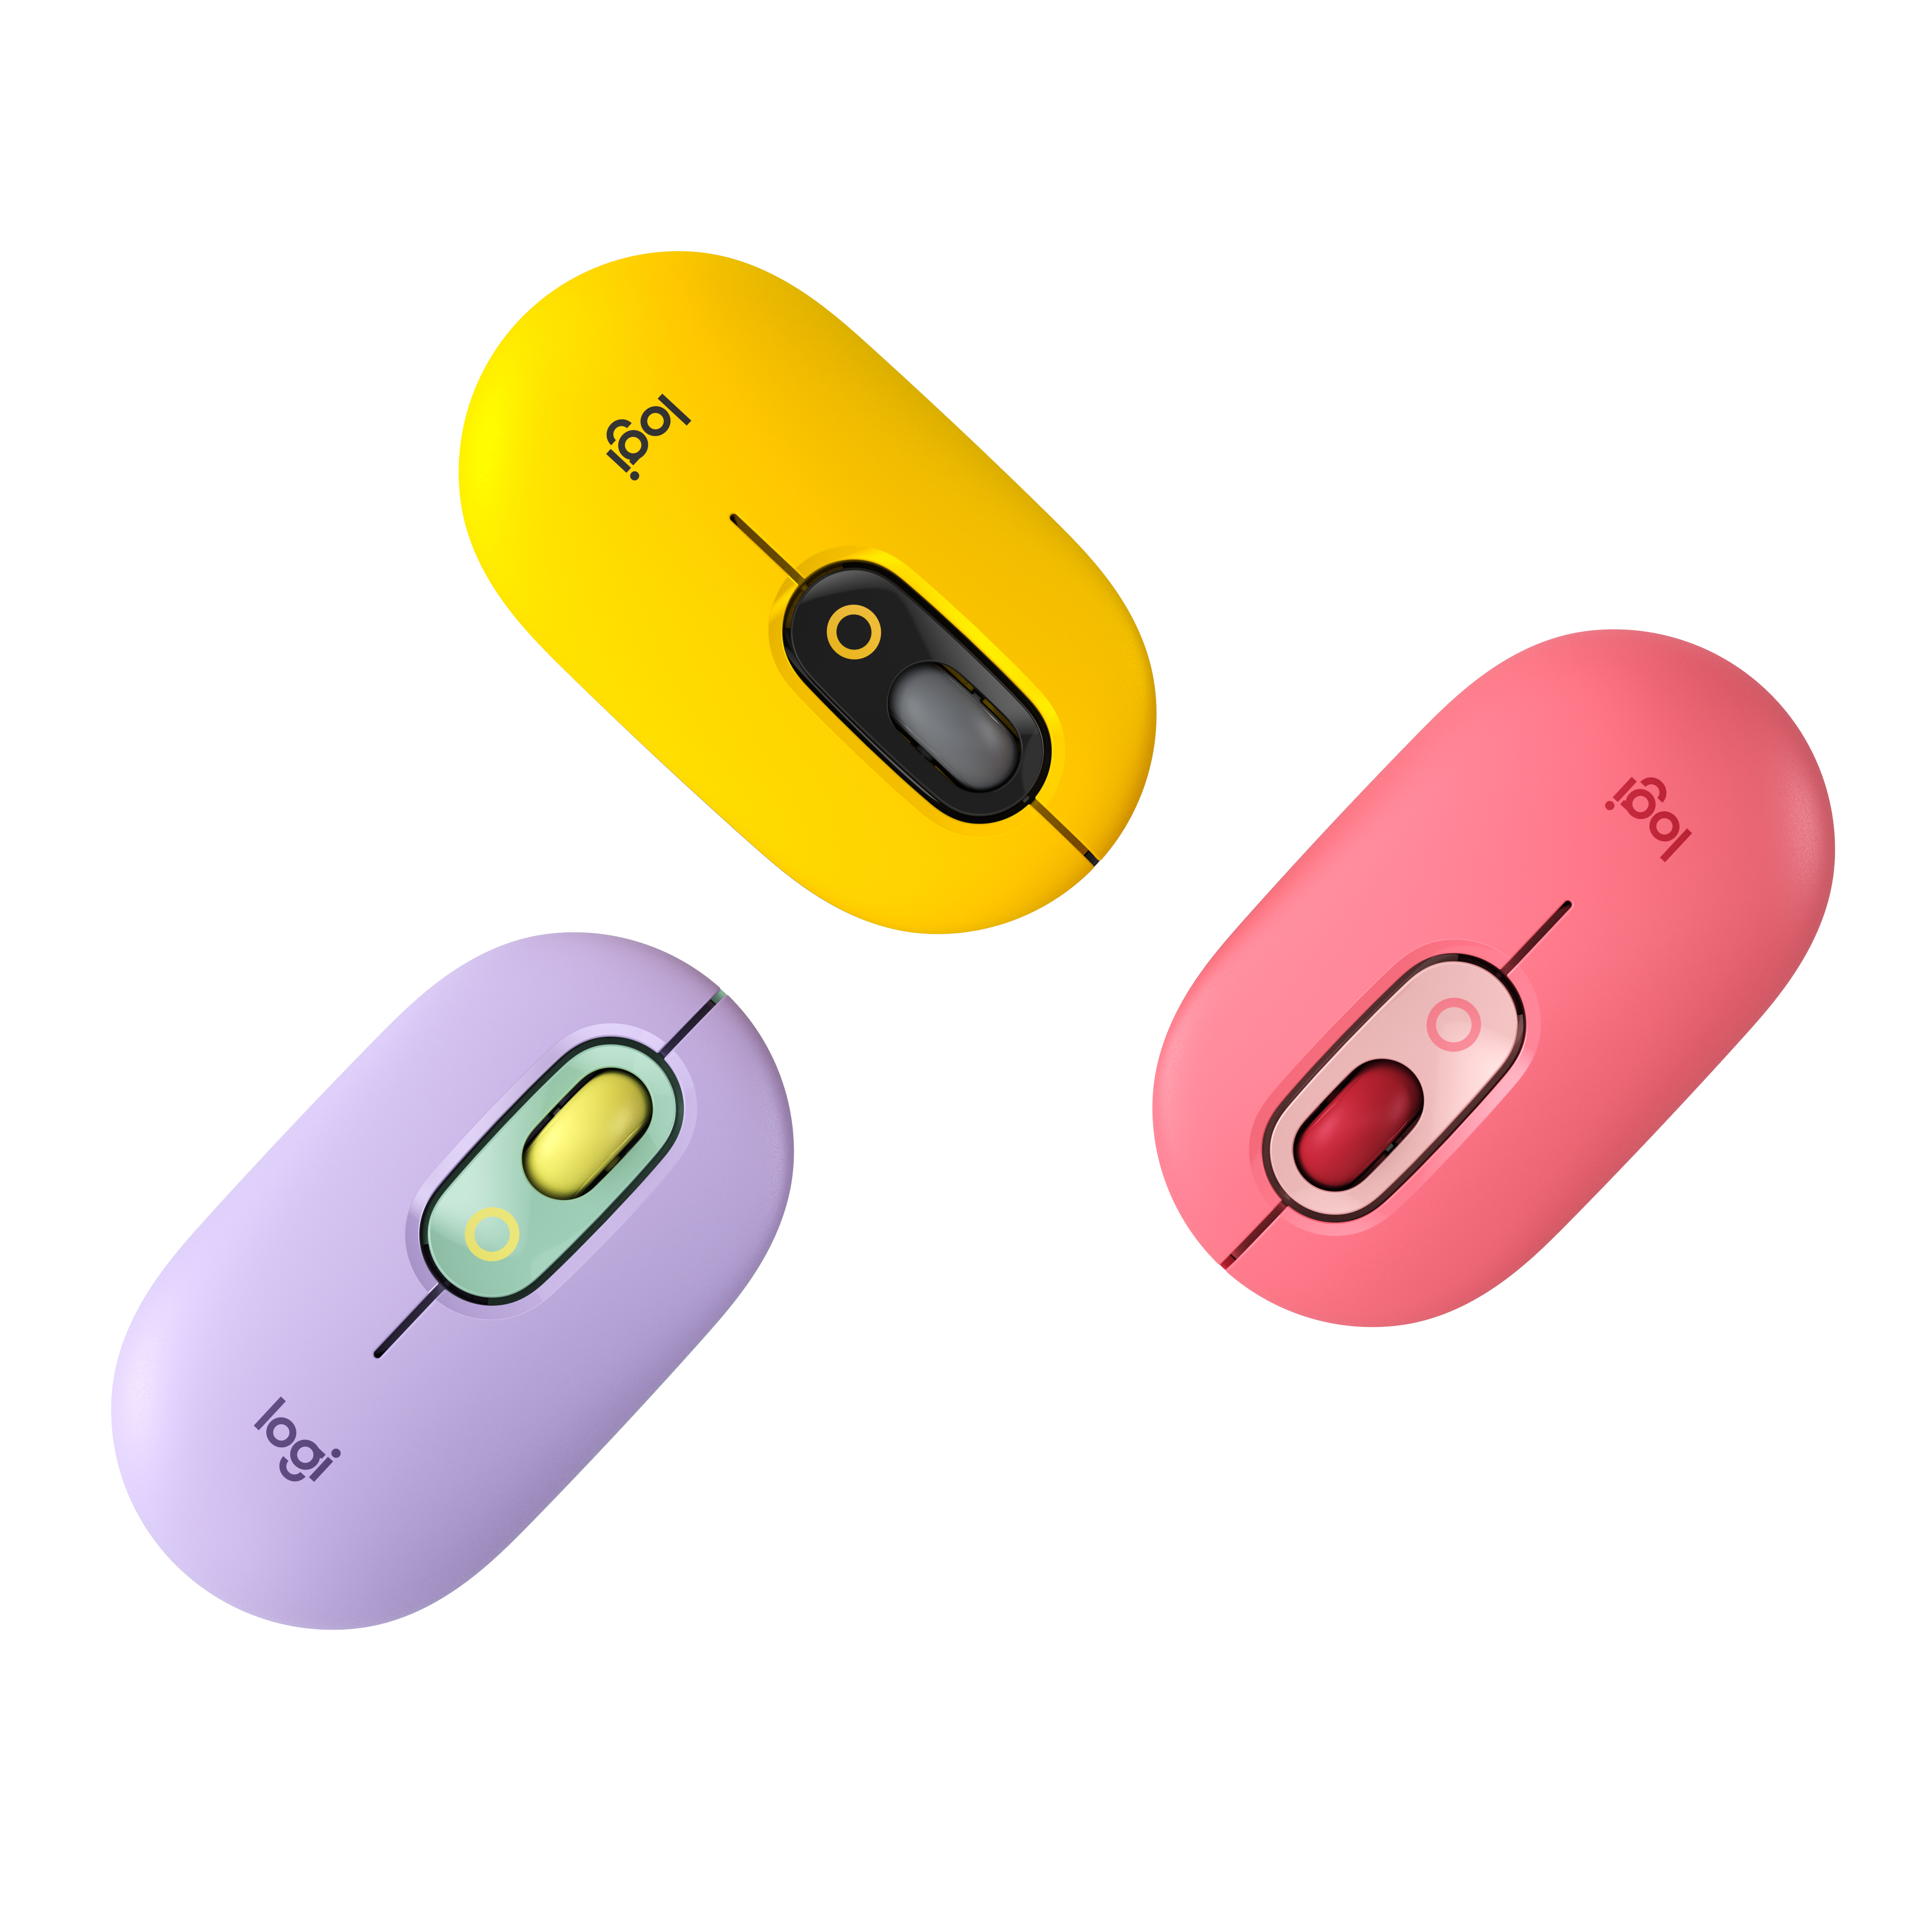 Logitech Mouse review: Emoji button meets colorful simplicity | Ars Technica